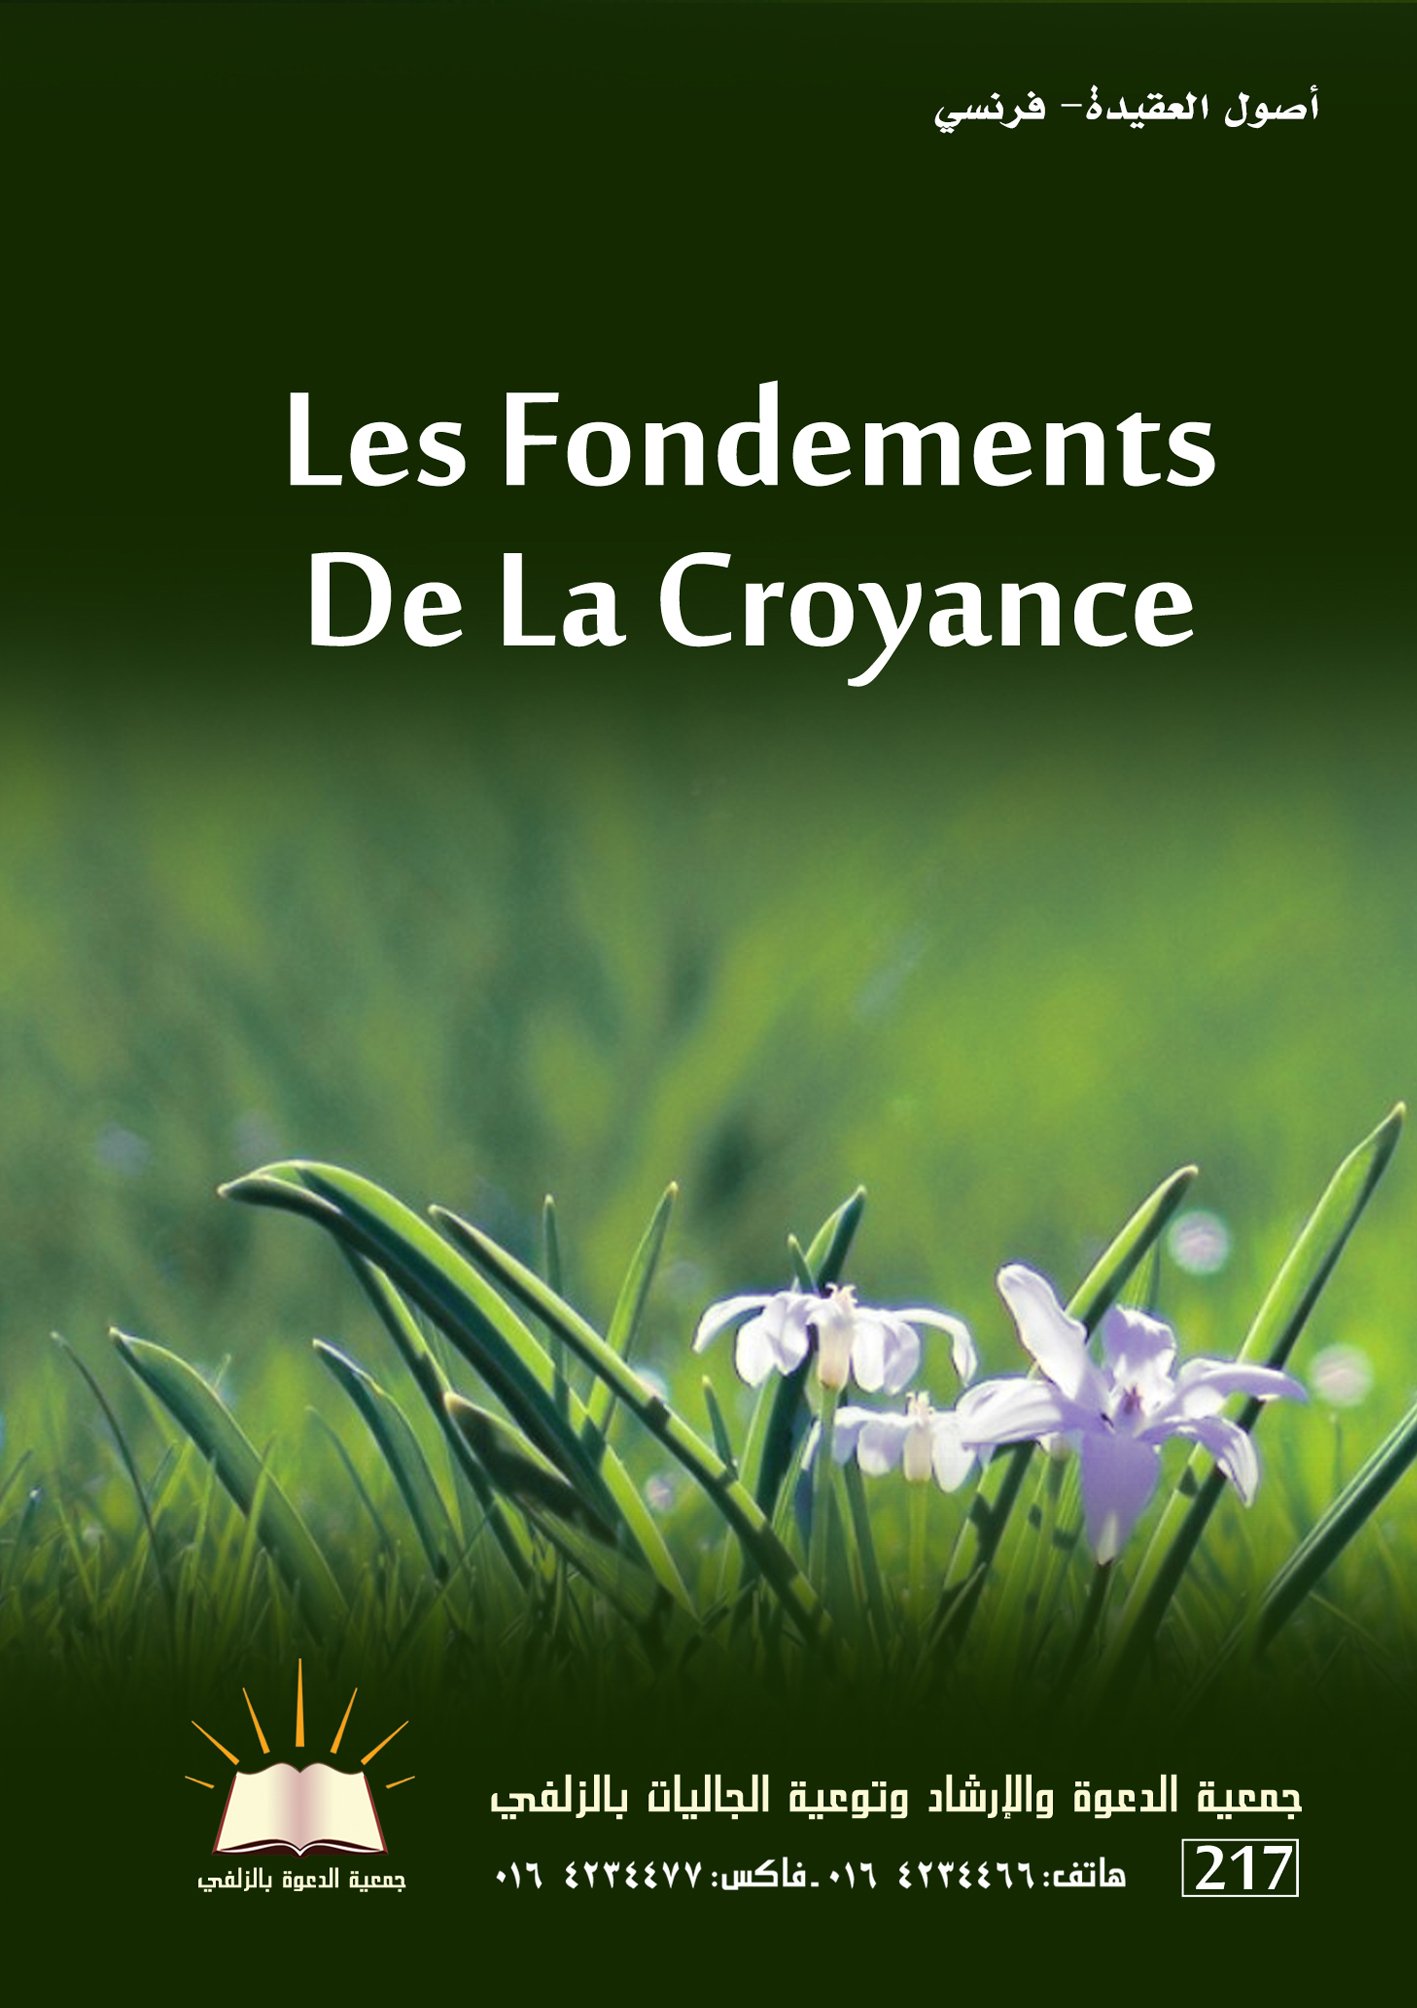 Les Fondements de La Croyance - أصول العقيدة